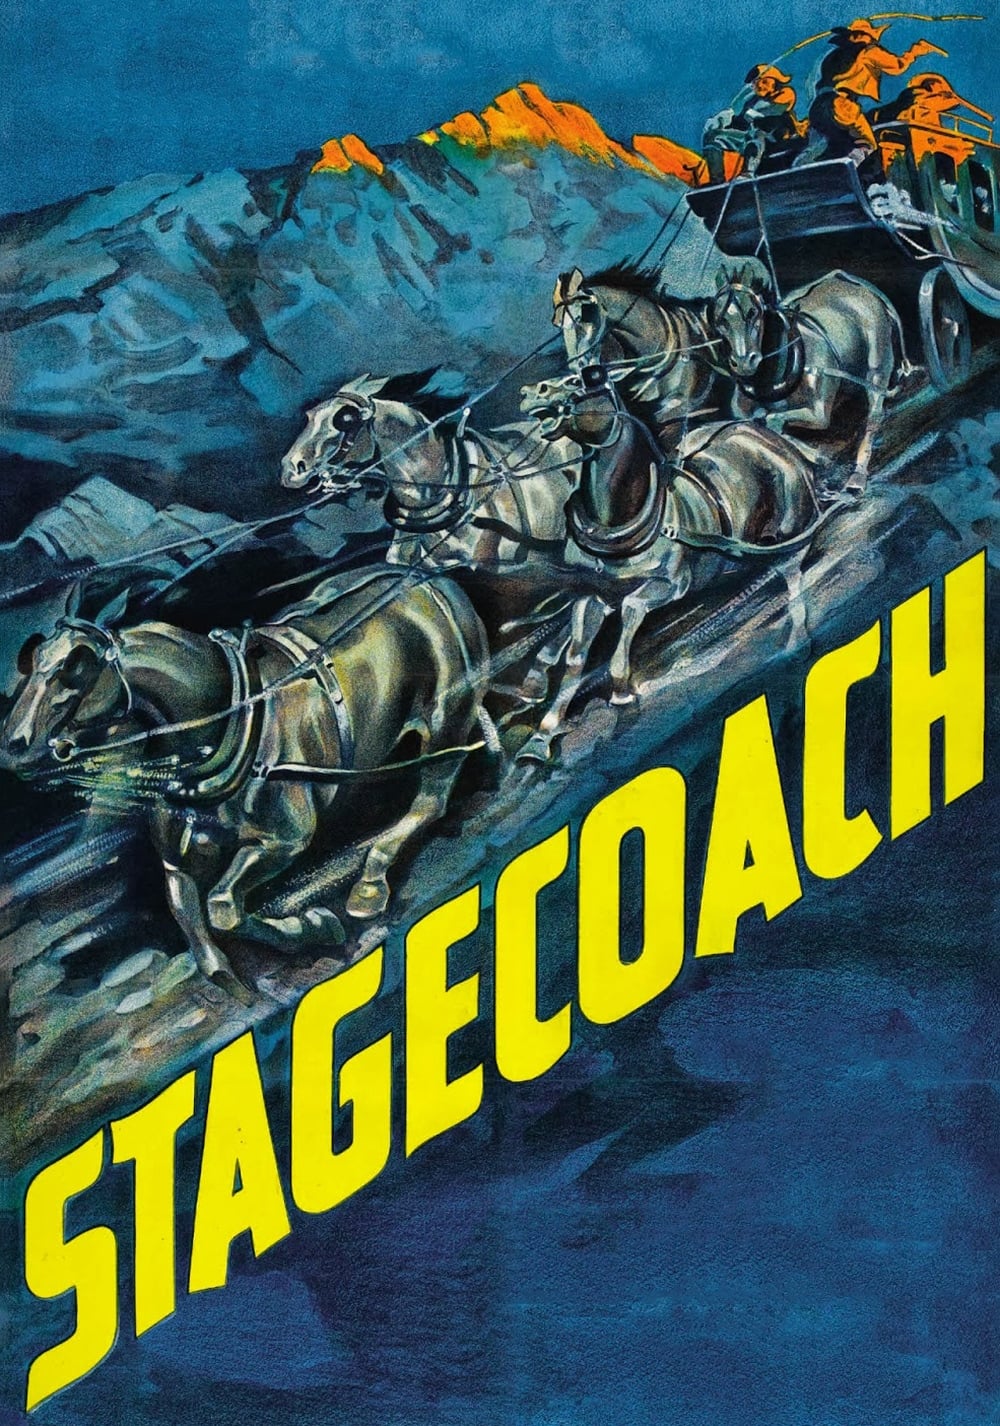 La diligencia (1939)